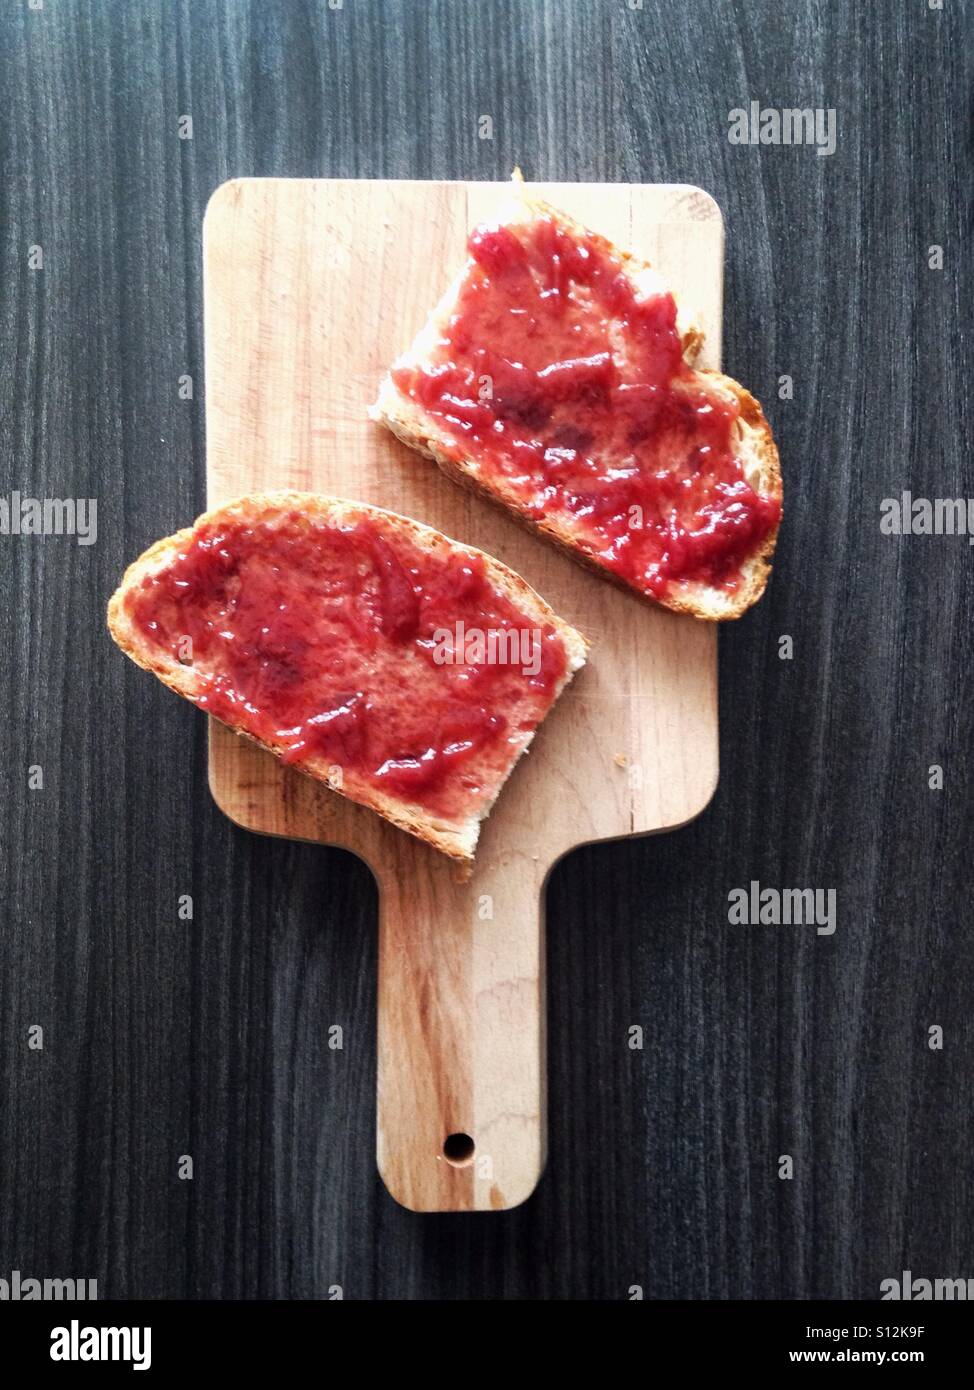 Italian breakfast with jam and bread Stock Photo